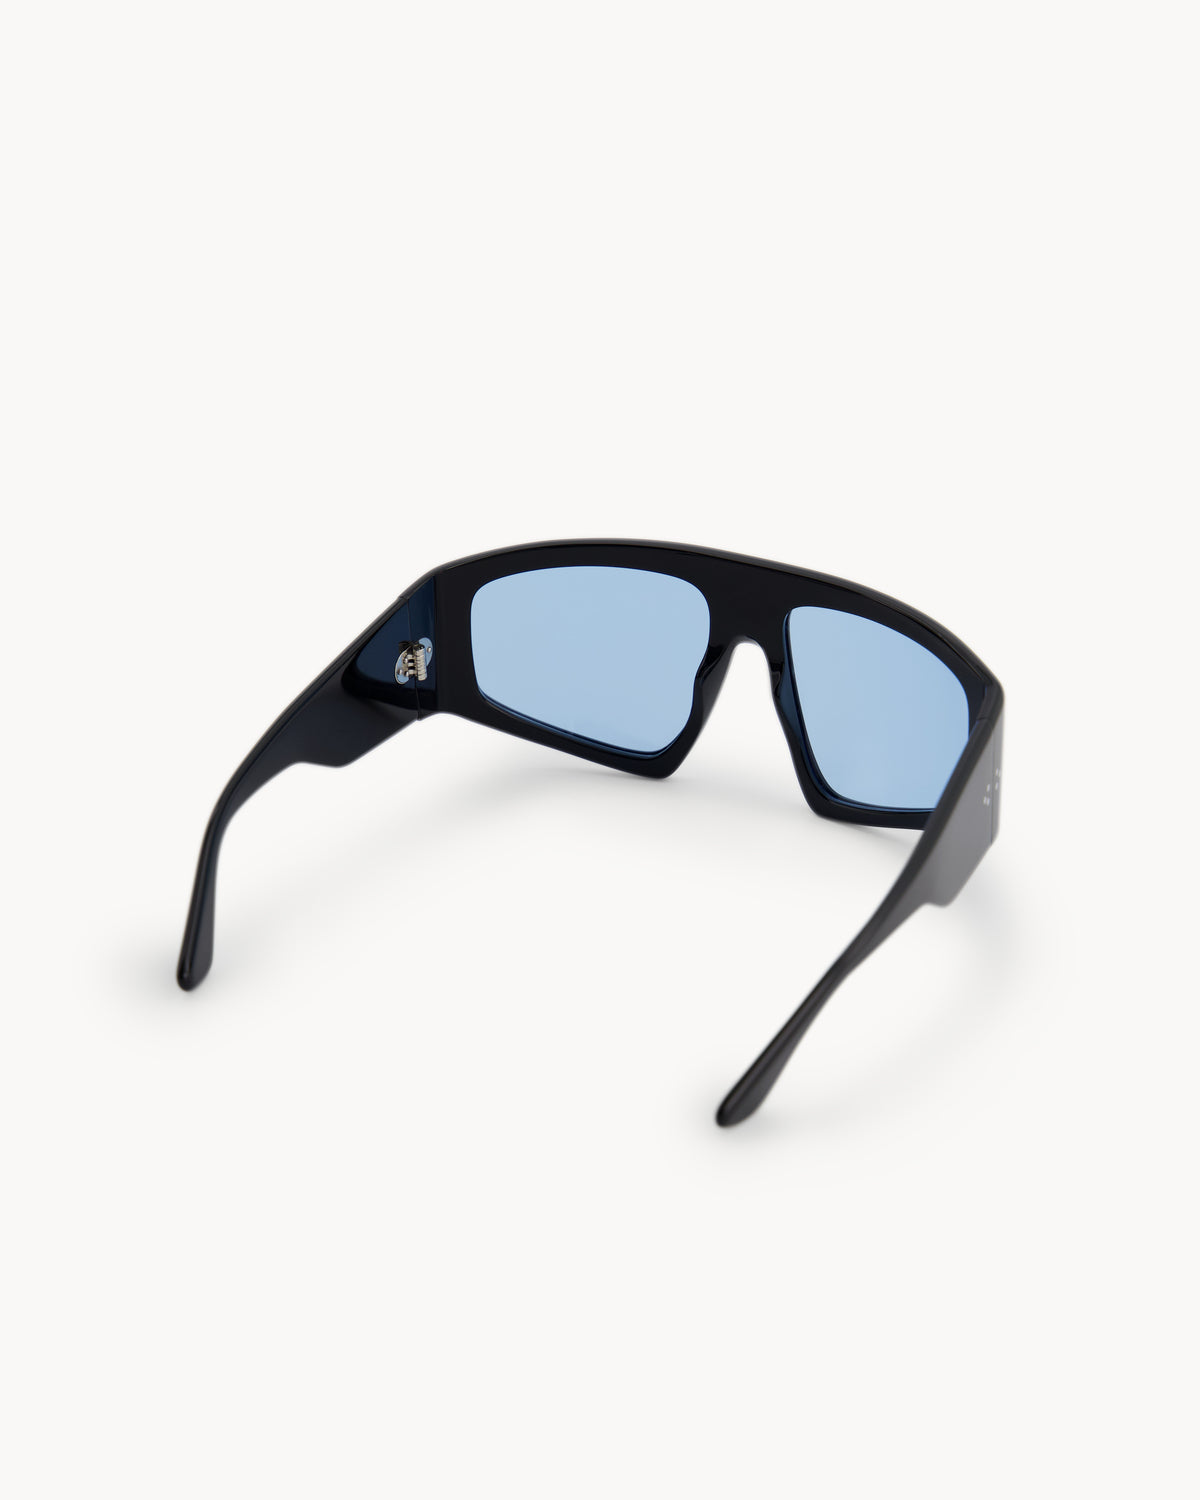 Port Tanger Noor Sunglasses in Black Acetate and Rif Blue Lenses 3